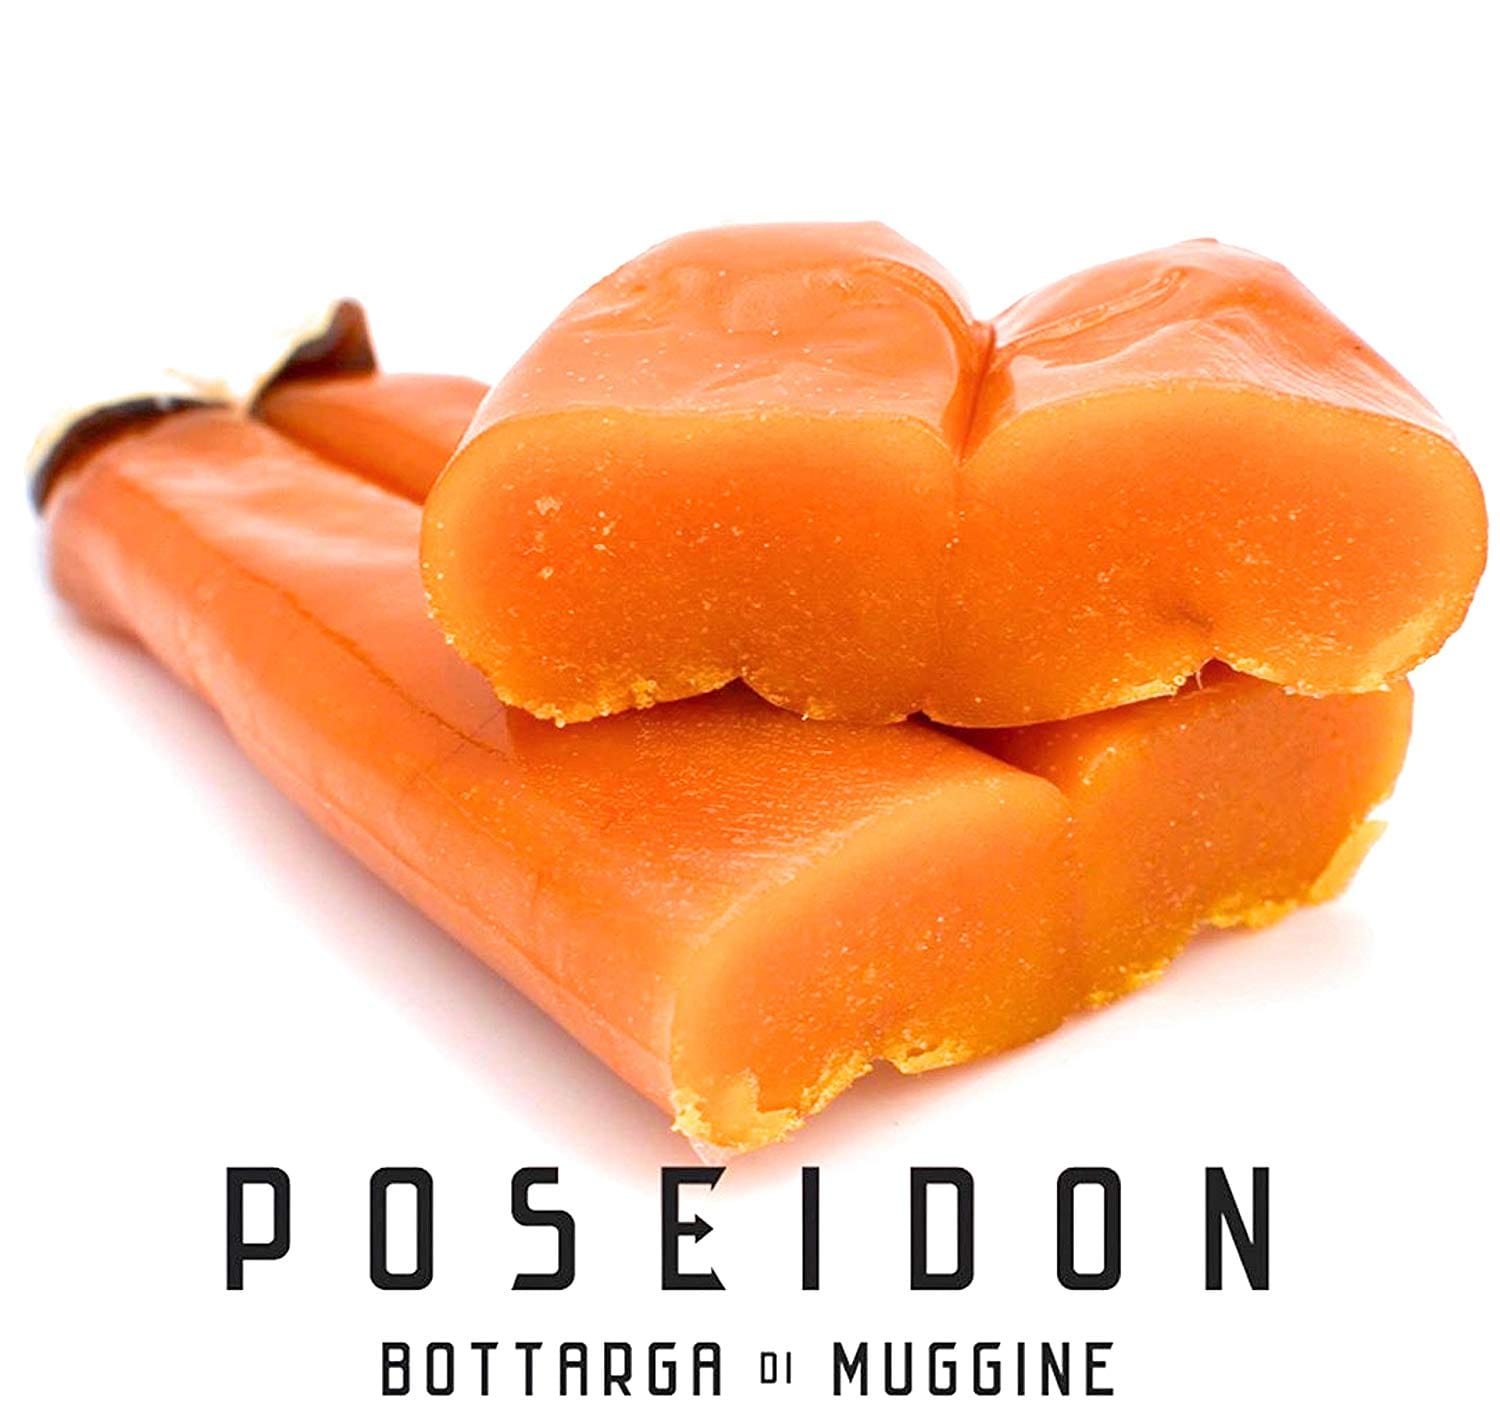 Poseidon Premium Whole Bottarga - Classic Italian